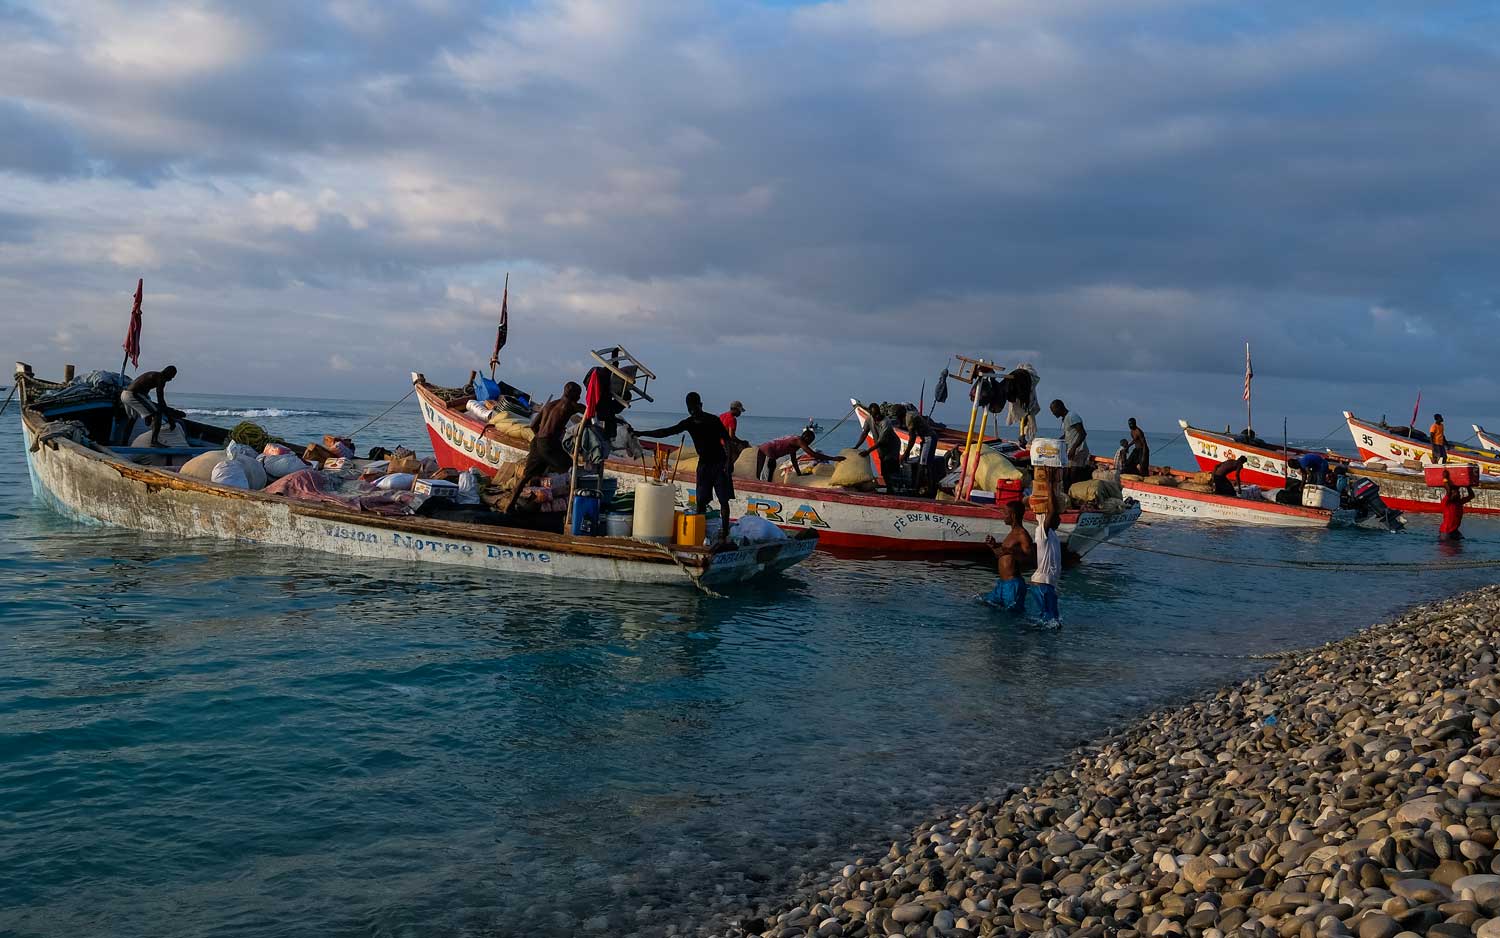 haitian men unloading large wooden boats